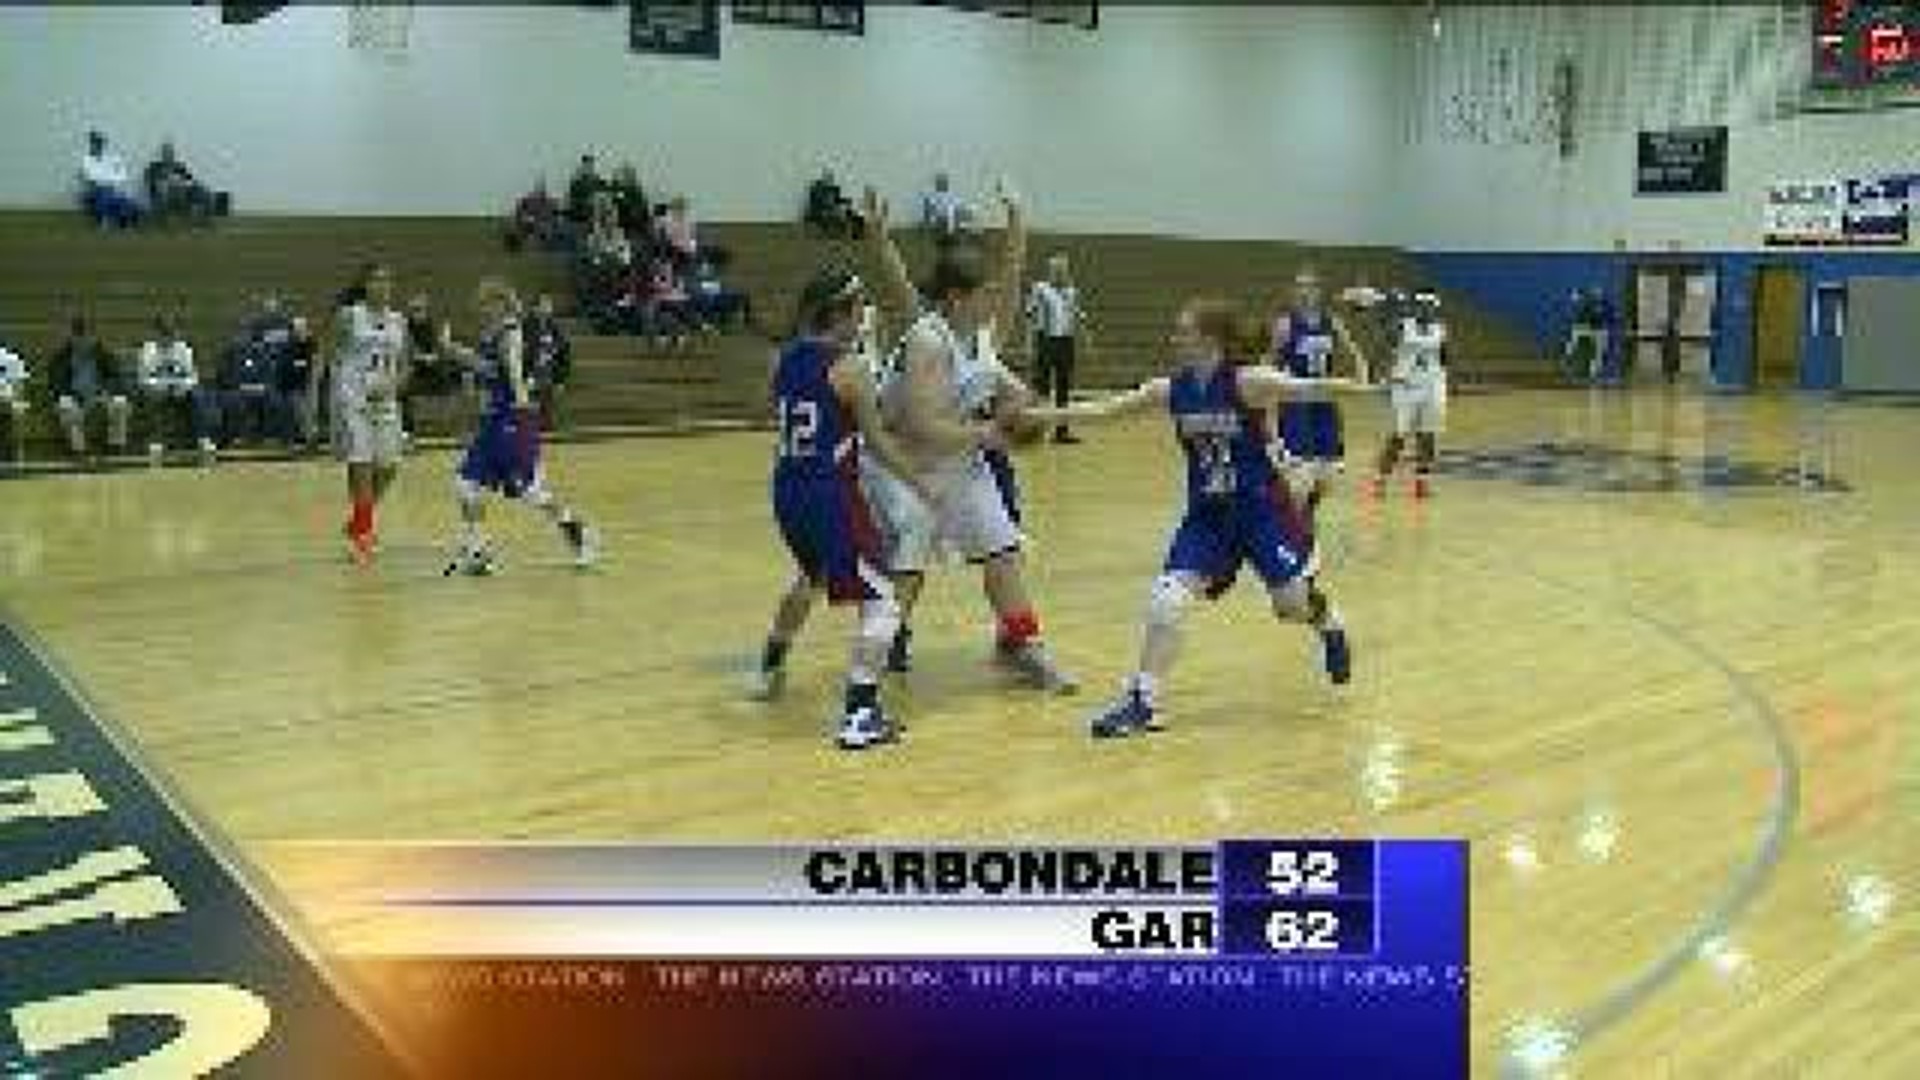 GAR vs Carbondale